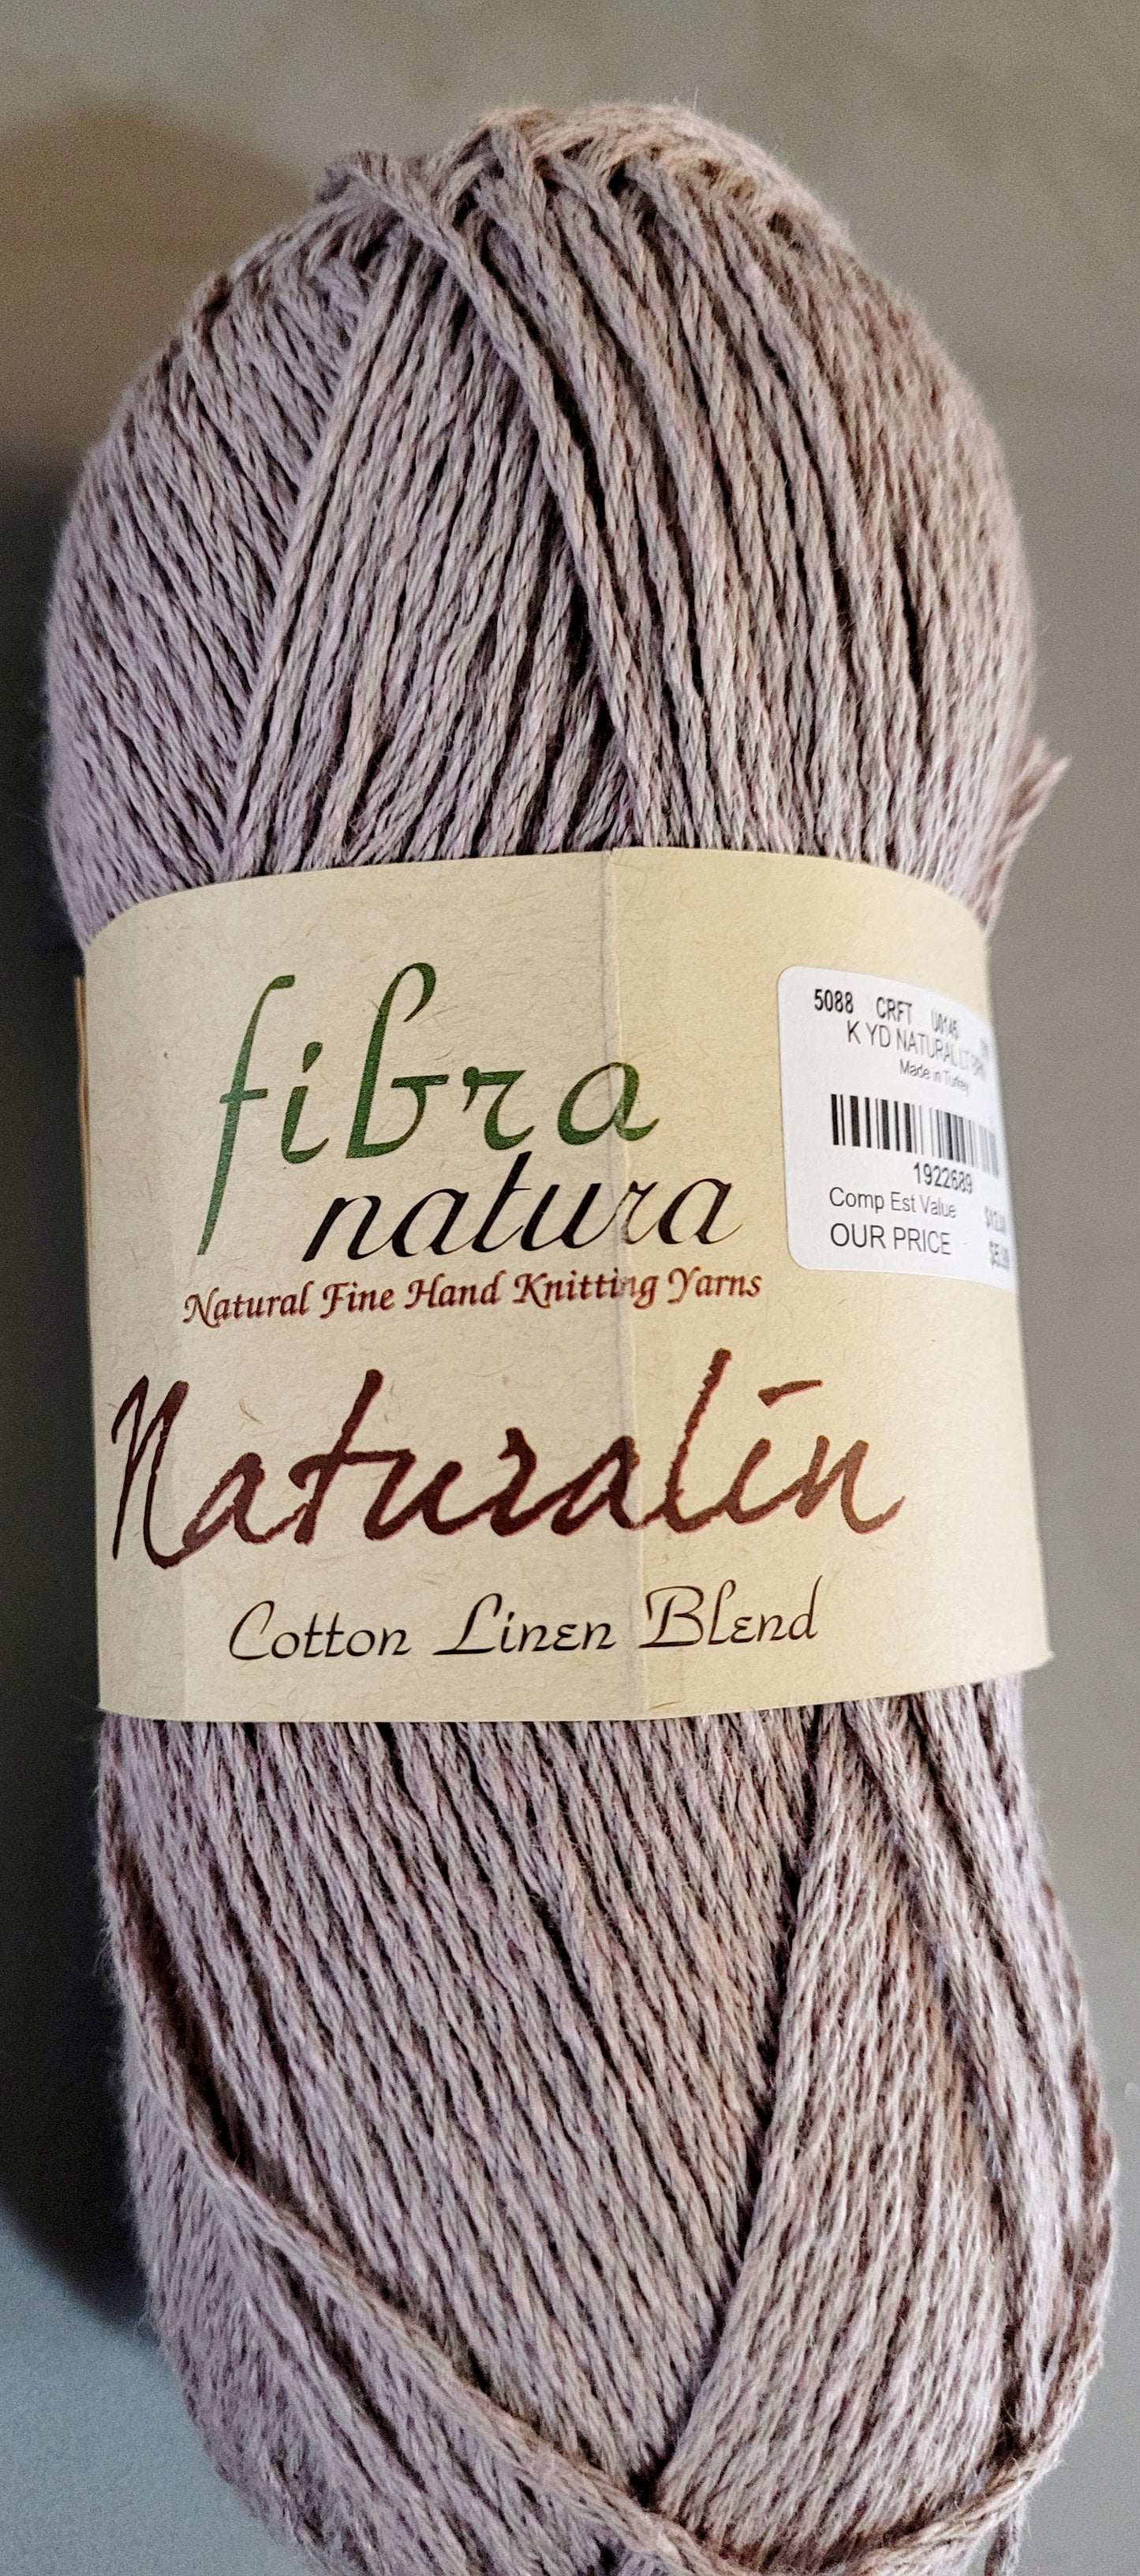 Four (4) 'Naturalin' Cotton Linen Blend *Hand Knitting Yarn (Color: TBrown)